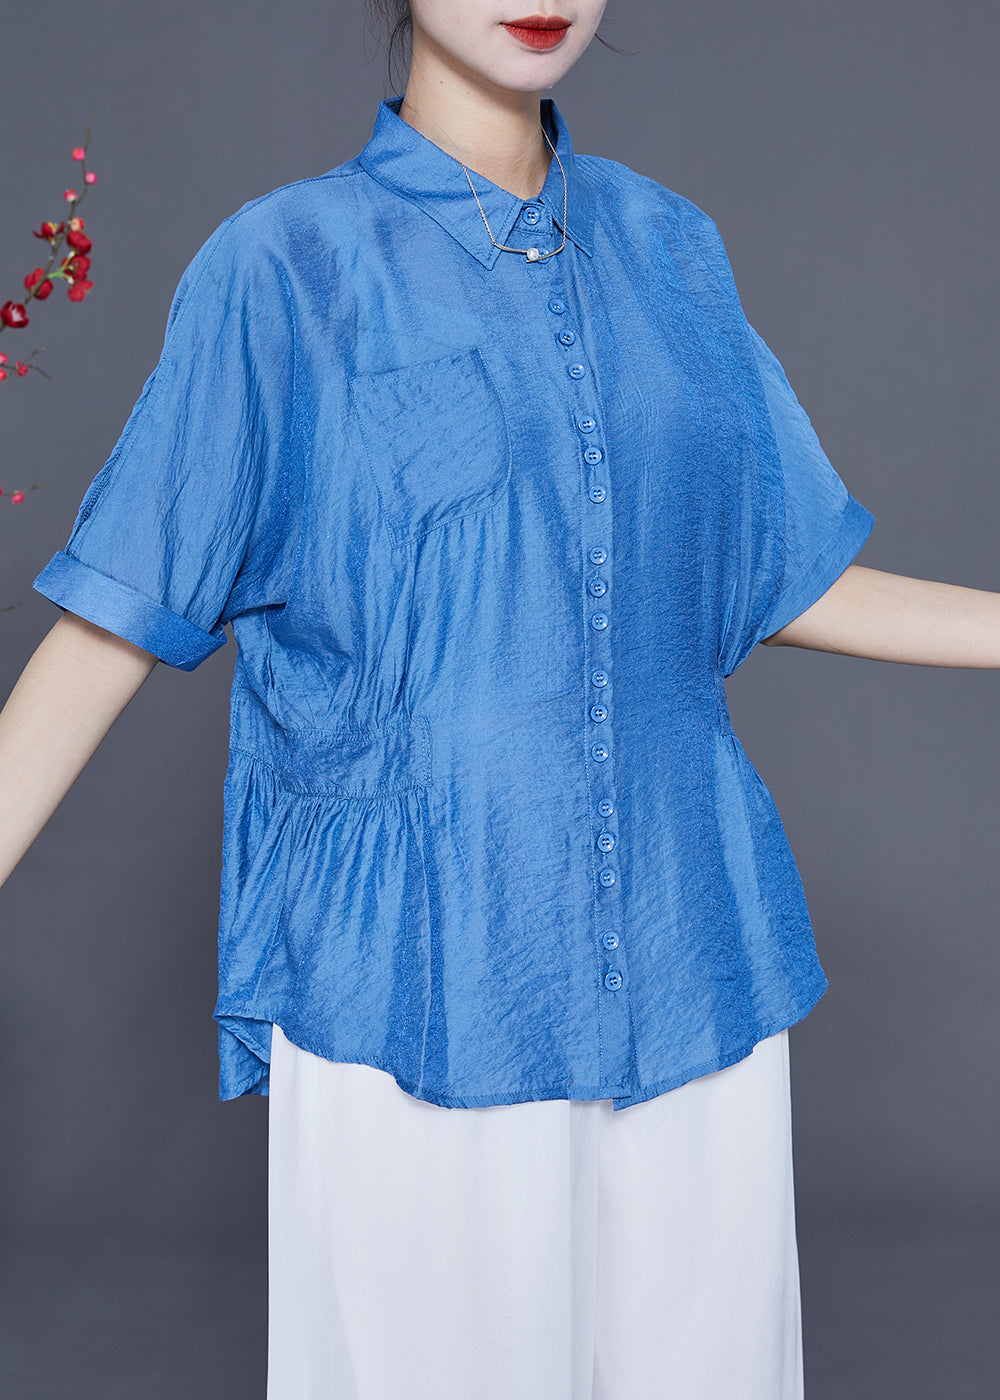 Casual Blue Peter Pan Collar Wrinkled Silk Shirt Tops Summer LY2411 - fabuloryshop